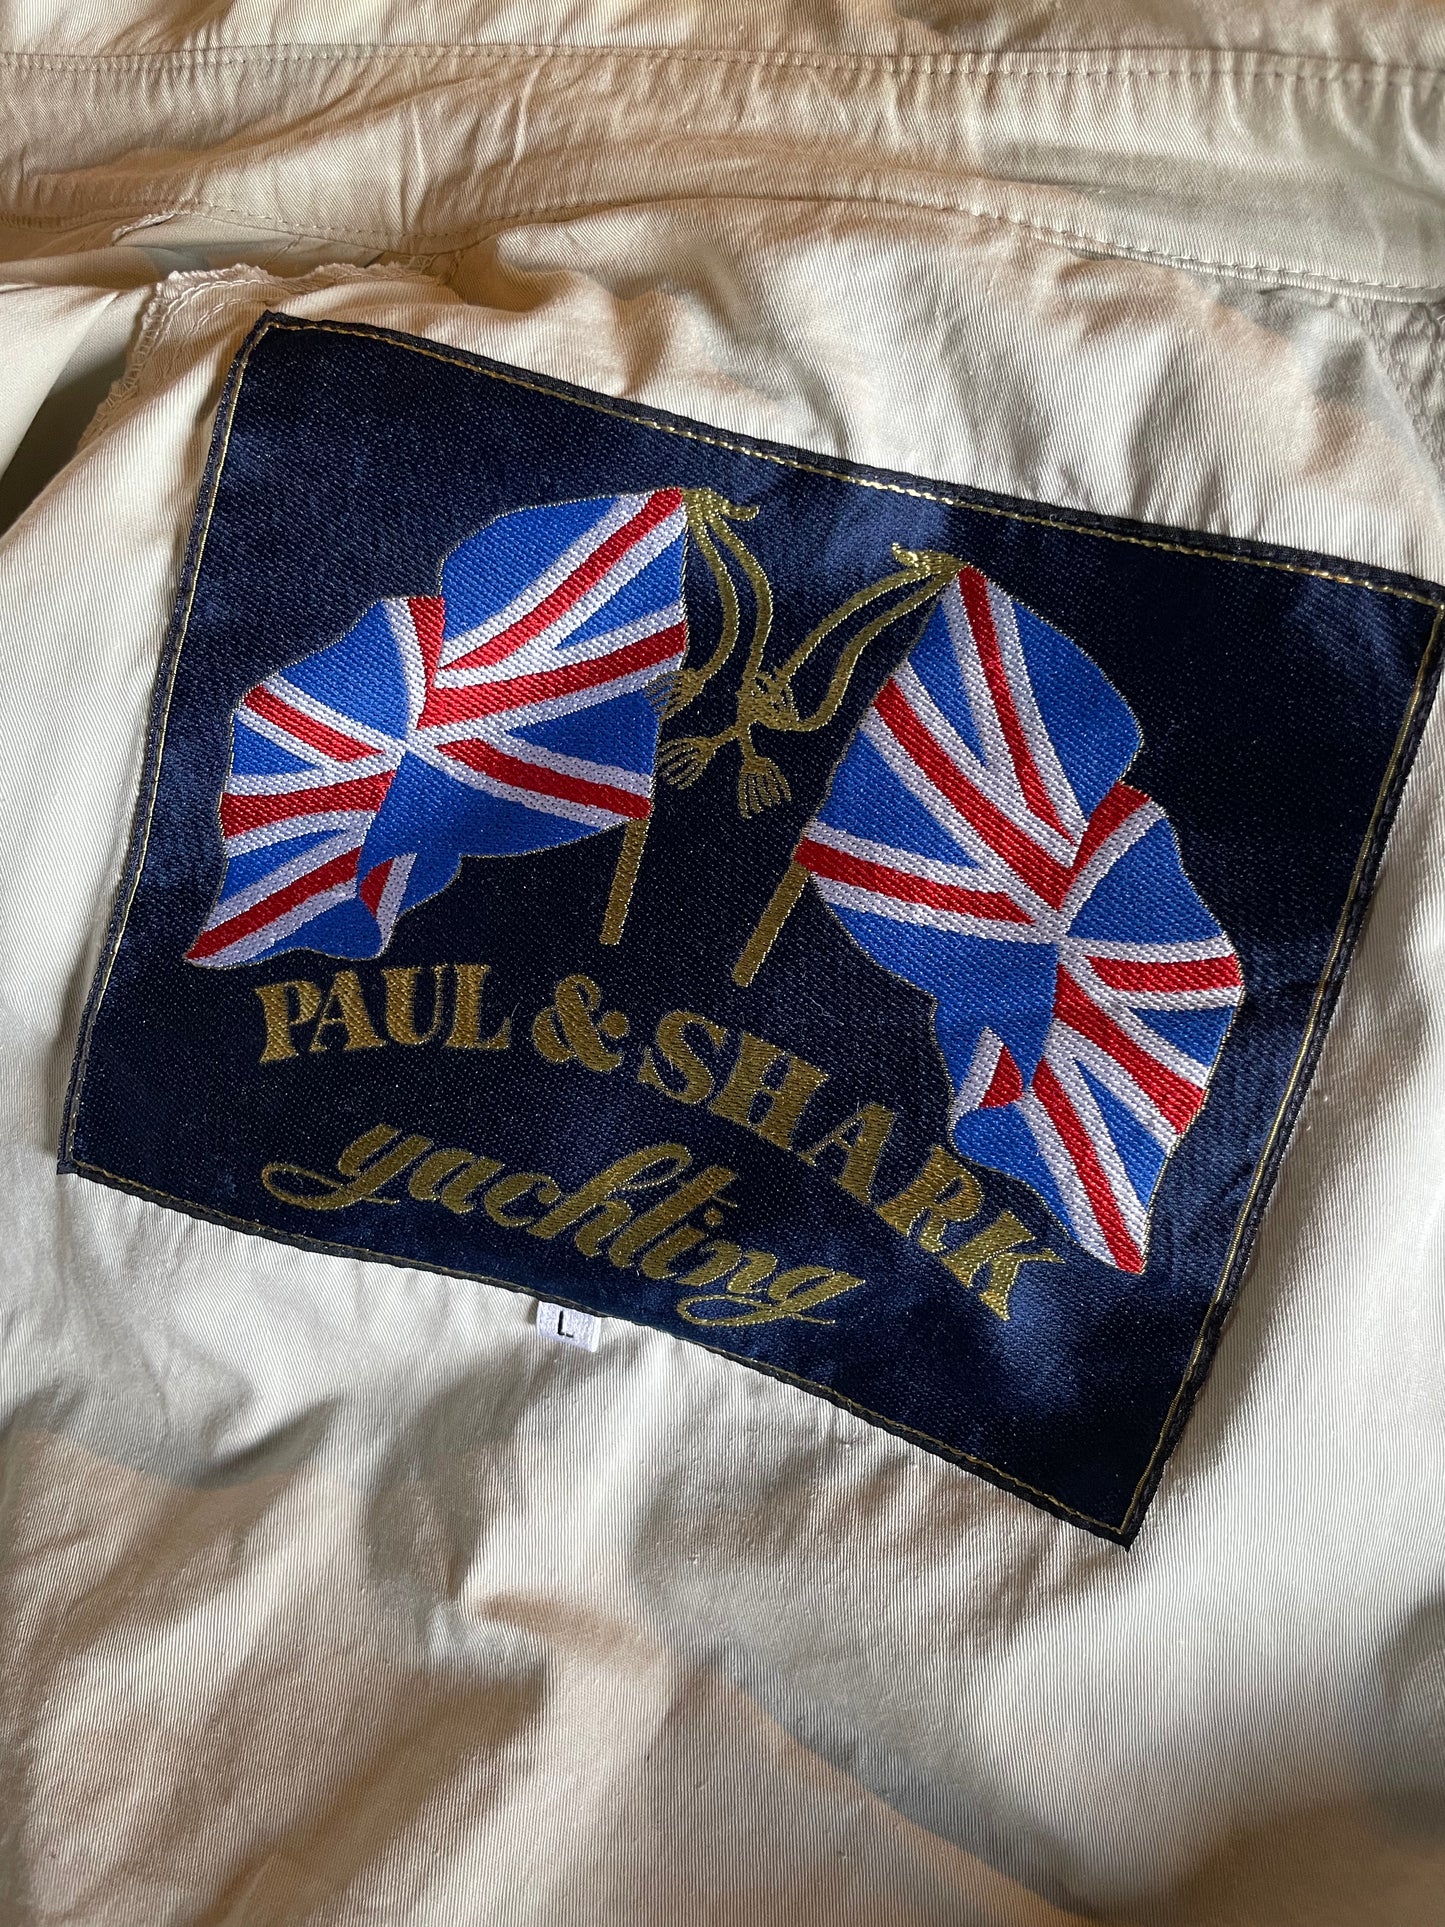 1980s Paul & Shark Trench coat (L)